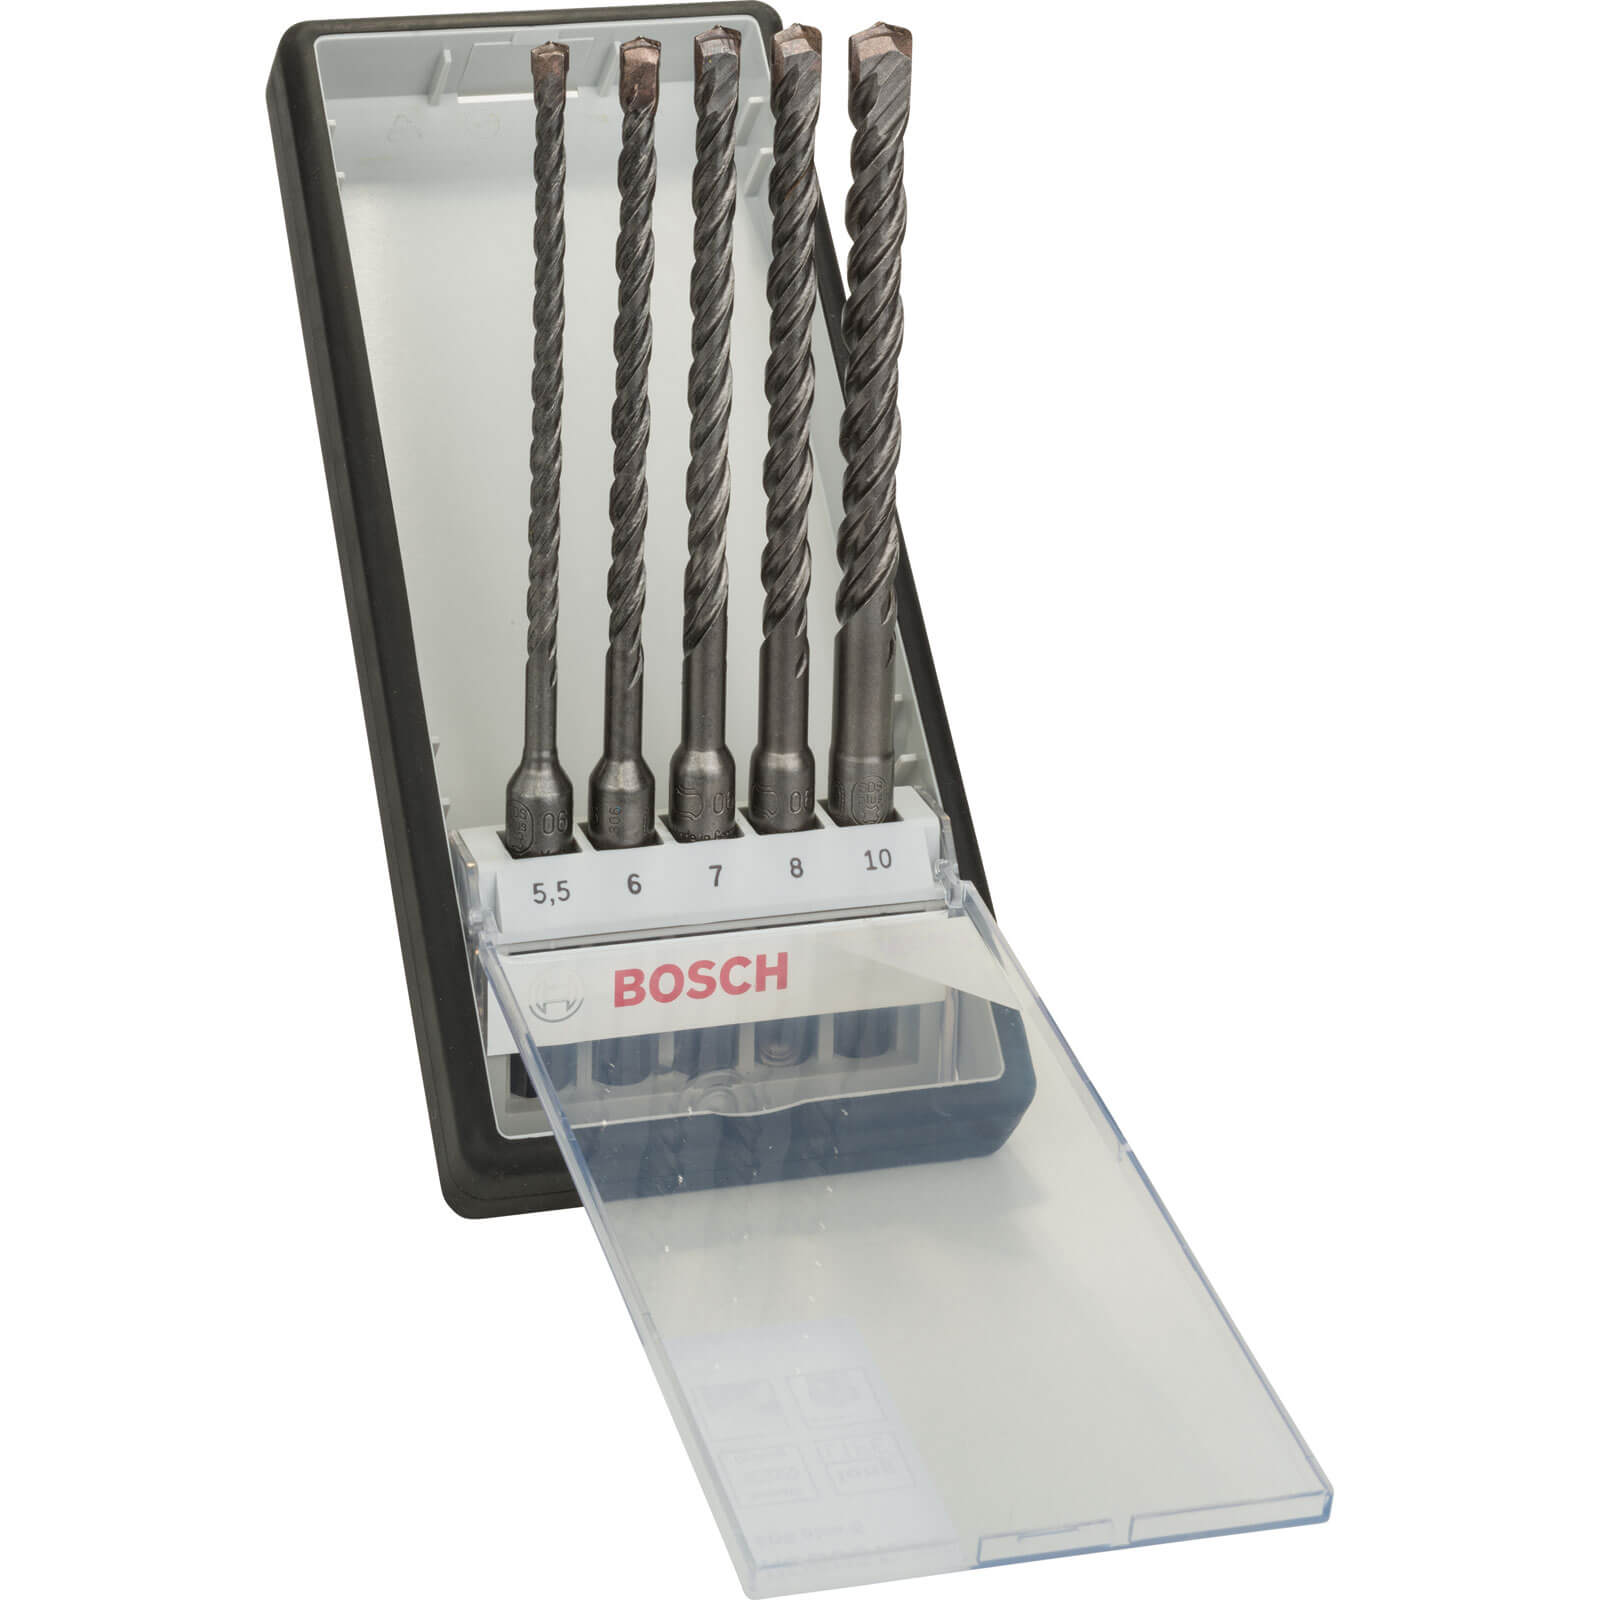 Photo of Bosch 5 Piece Sds Plus Masonry Drill Bit Set